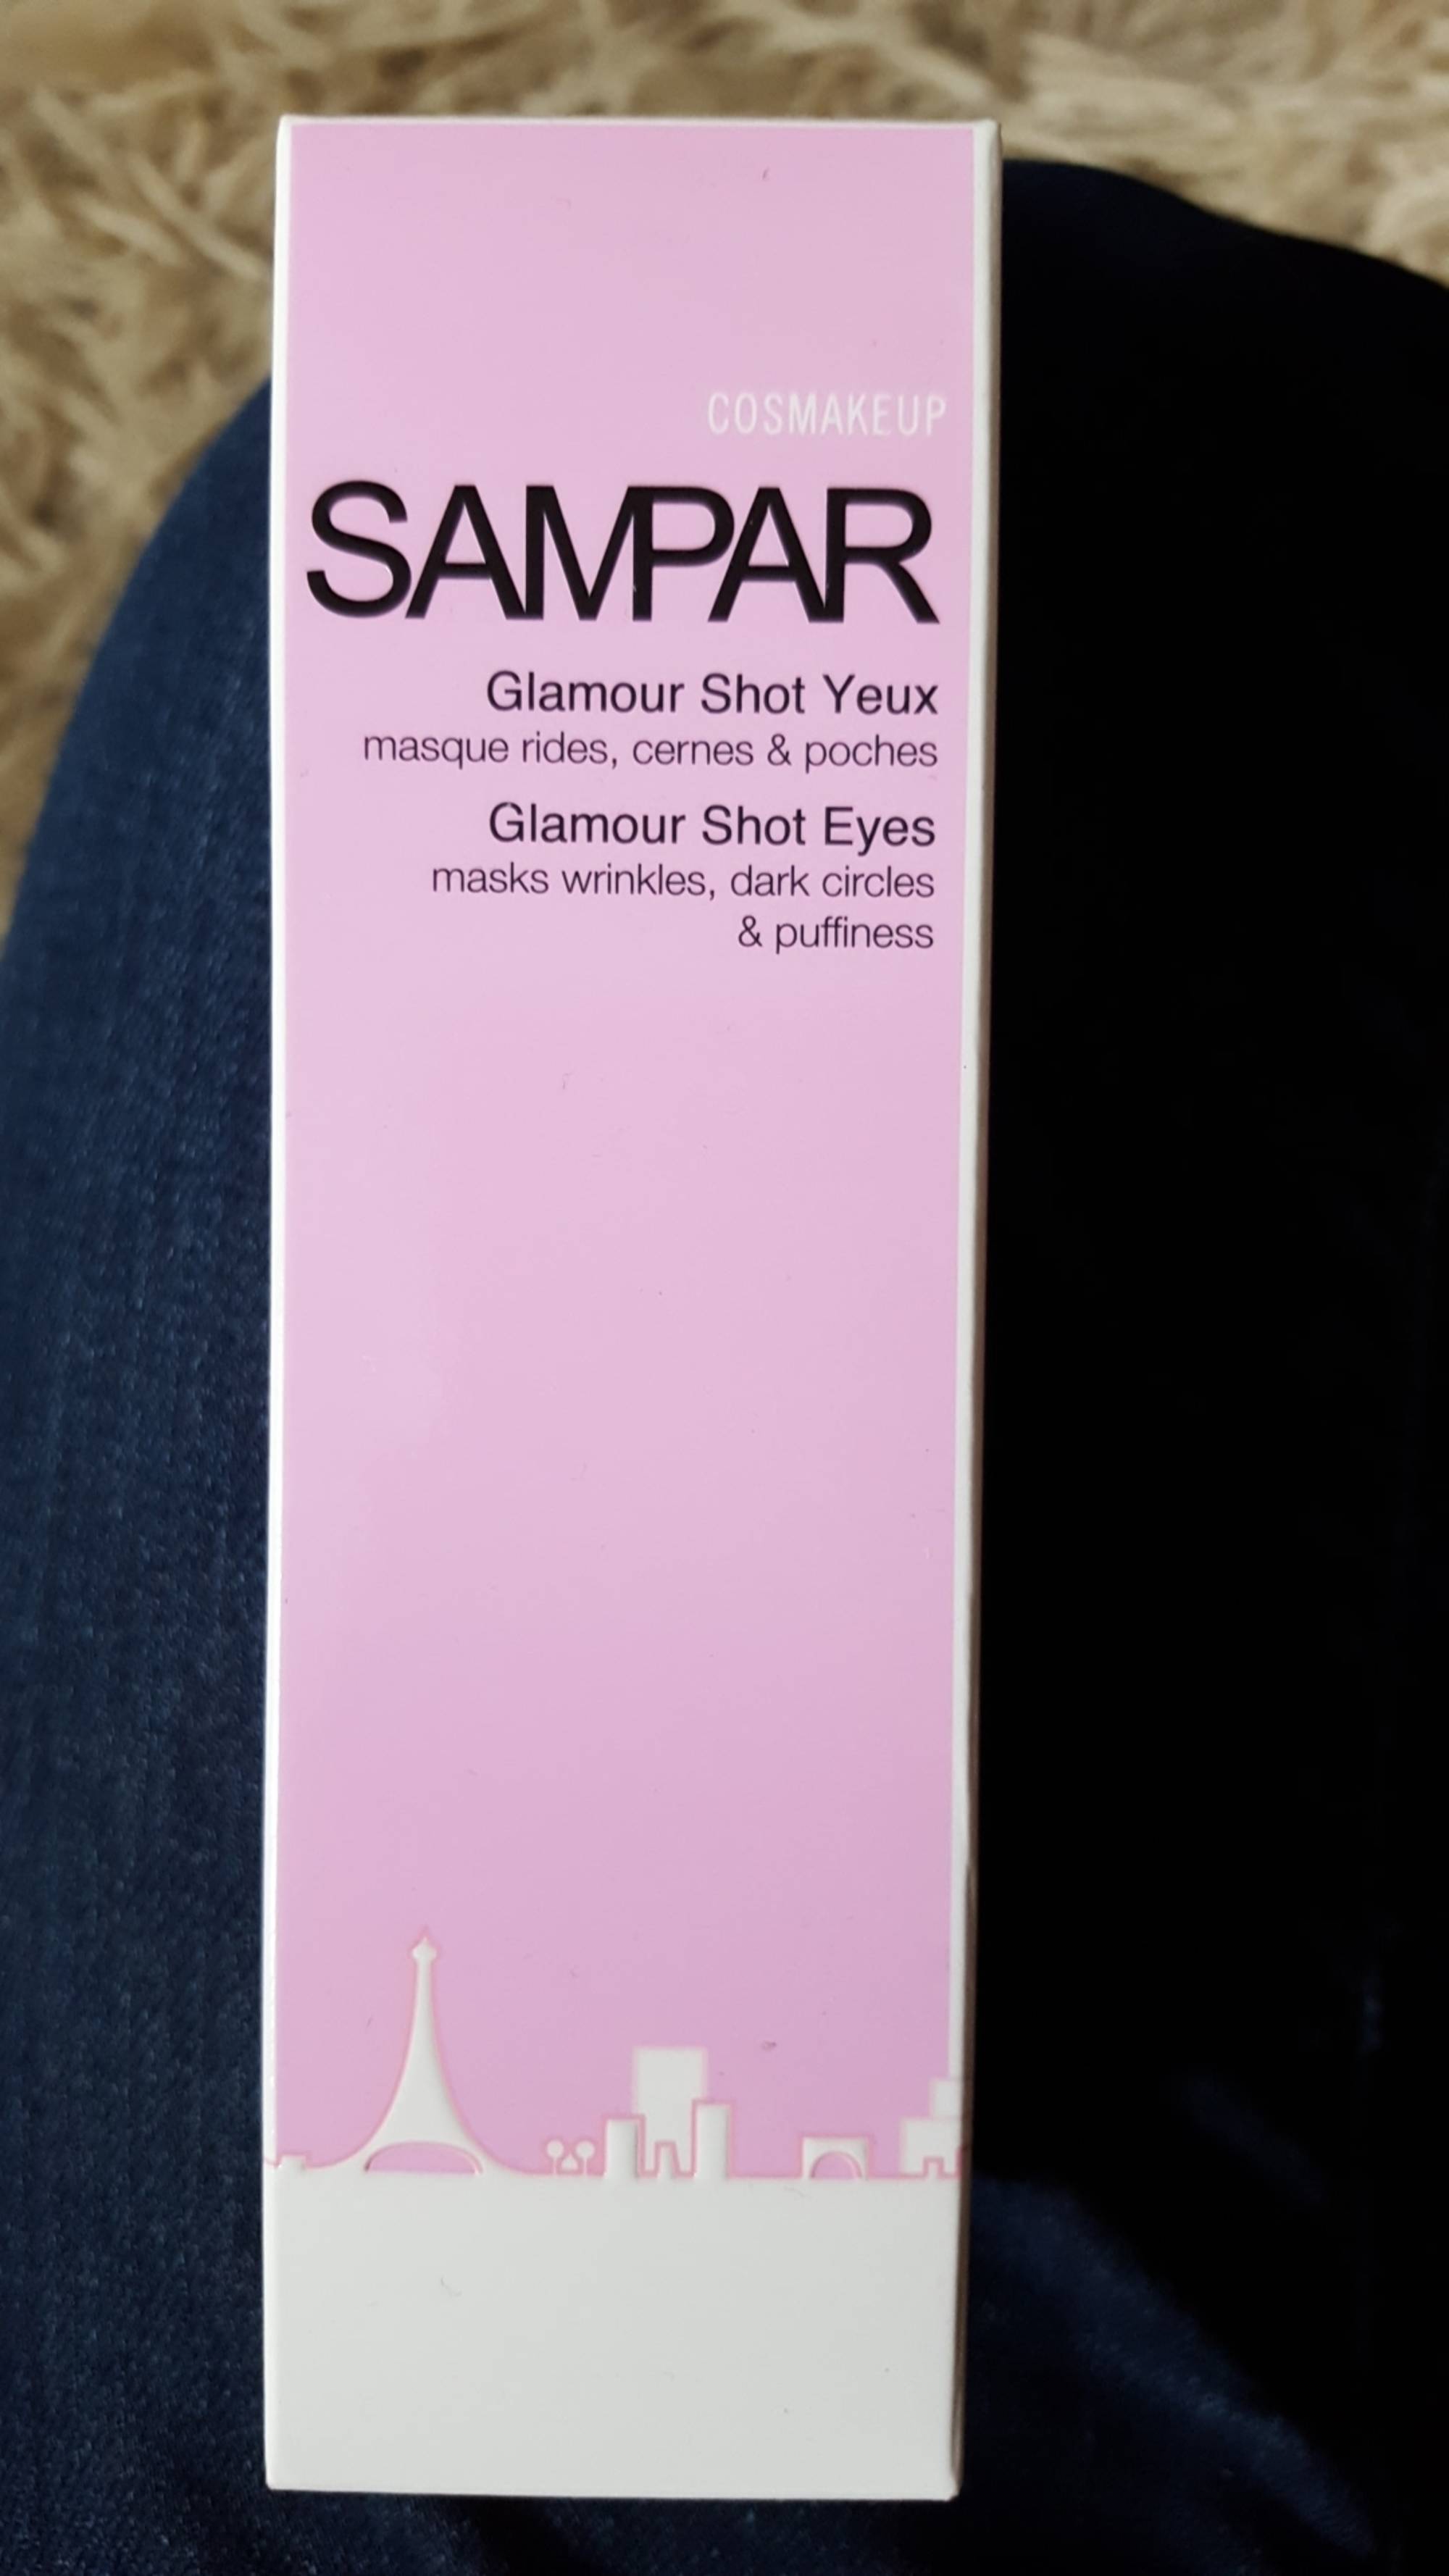 SAMPAR - Cosmakeup - Glamour shot yeux